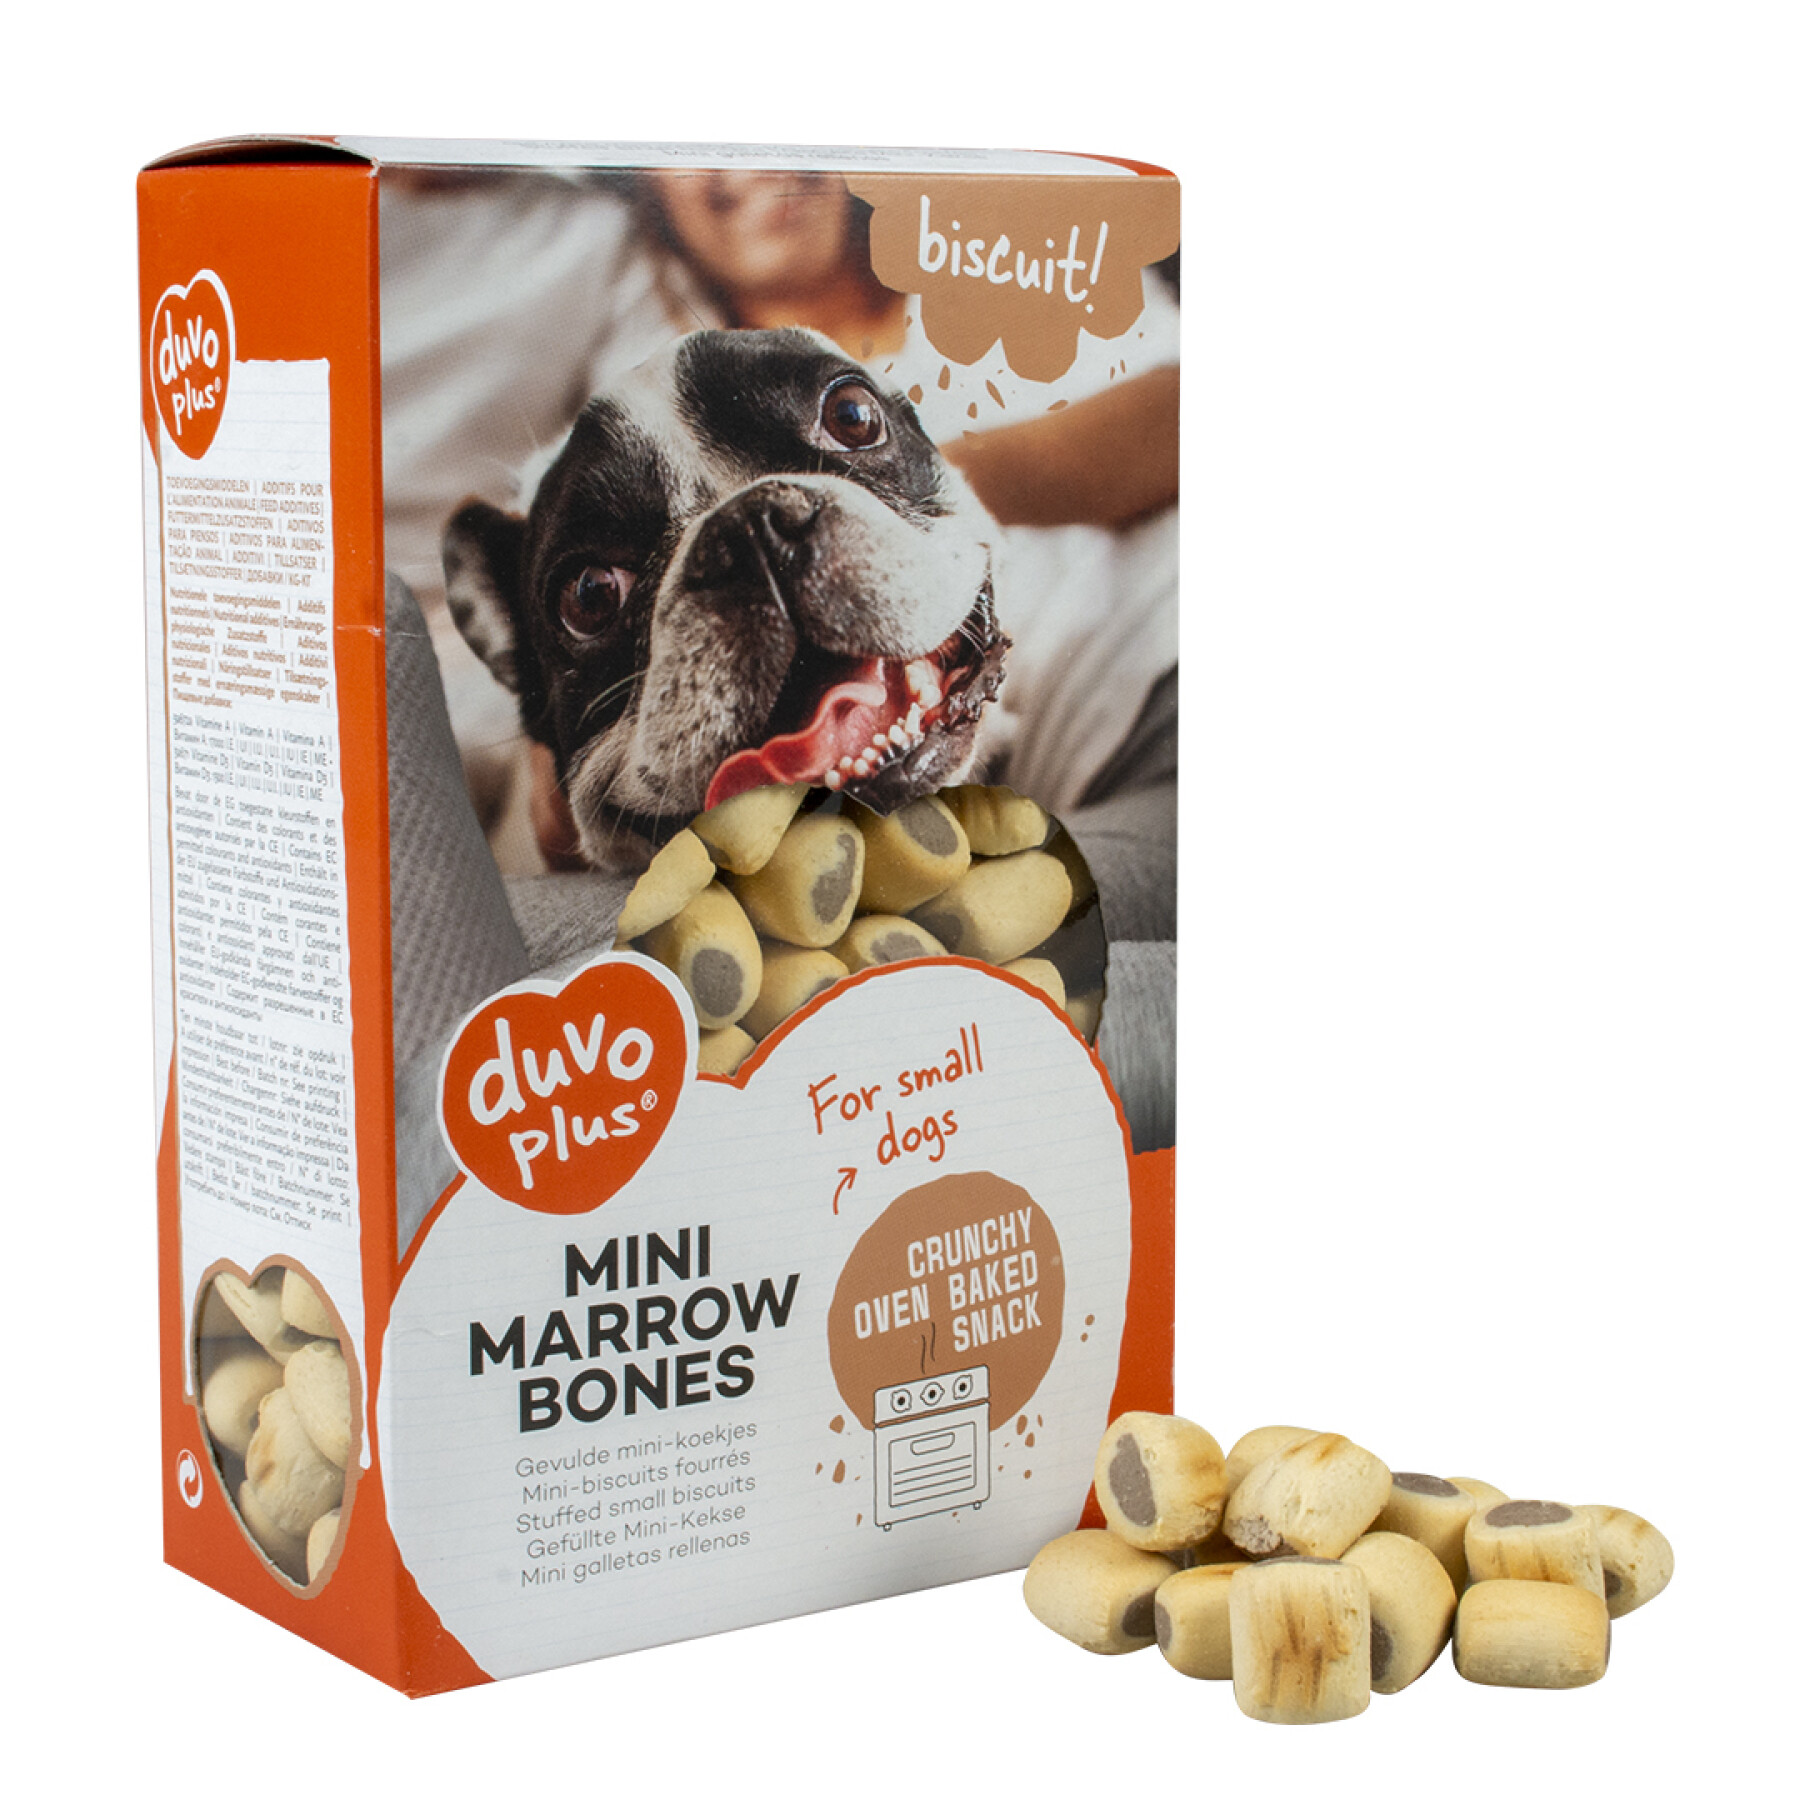 Cookie dog treats! Mini marrow bones Duvoplus